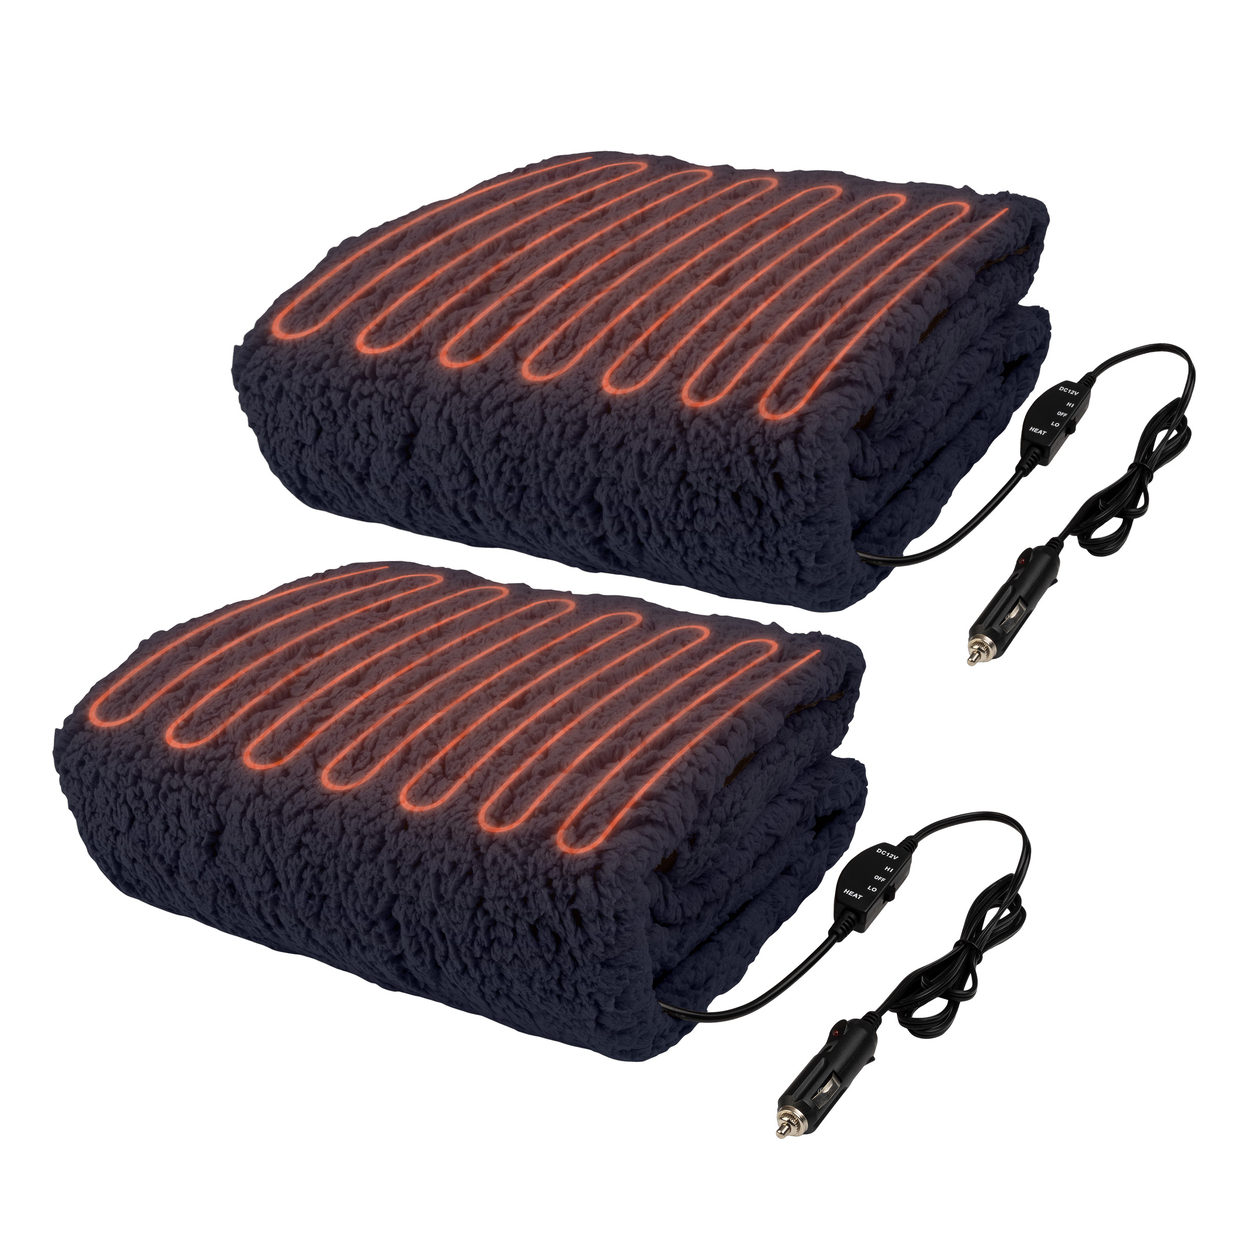 2Pack Heated Blanket Portable 12V Electric Travel Blanket Set For Car Truck RV - Blue